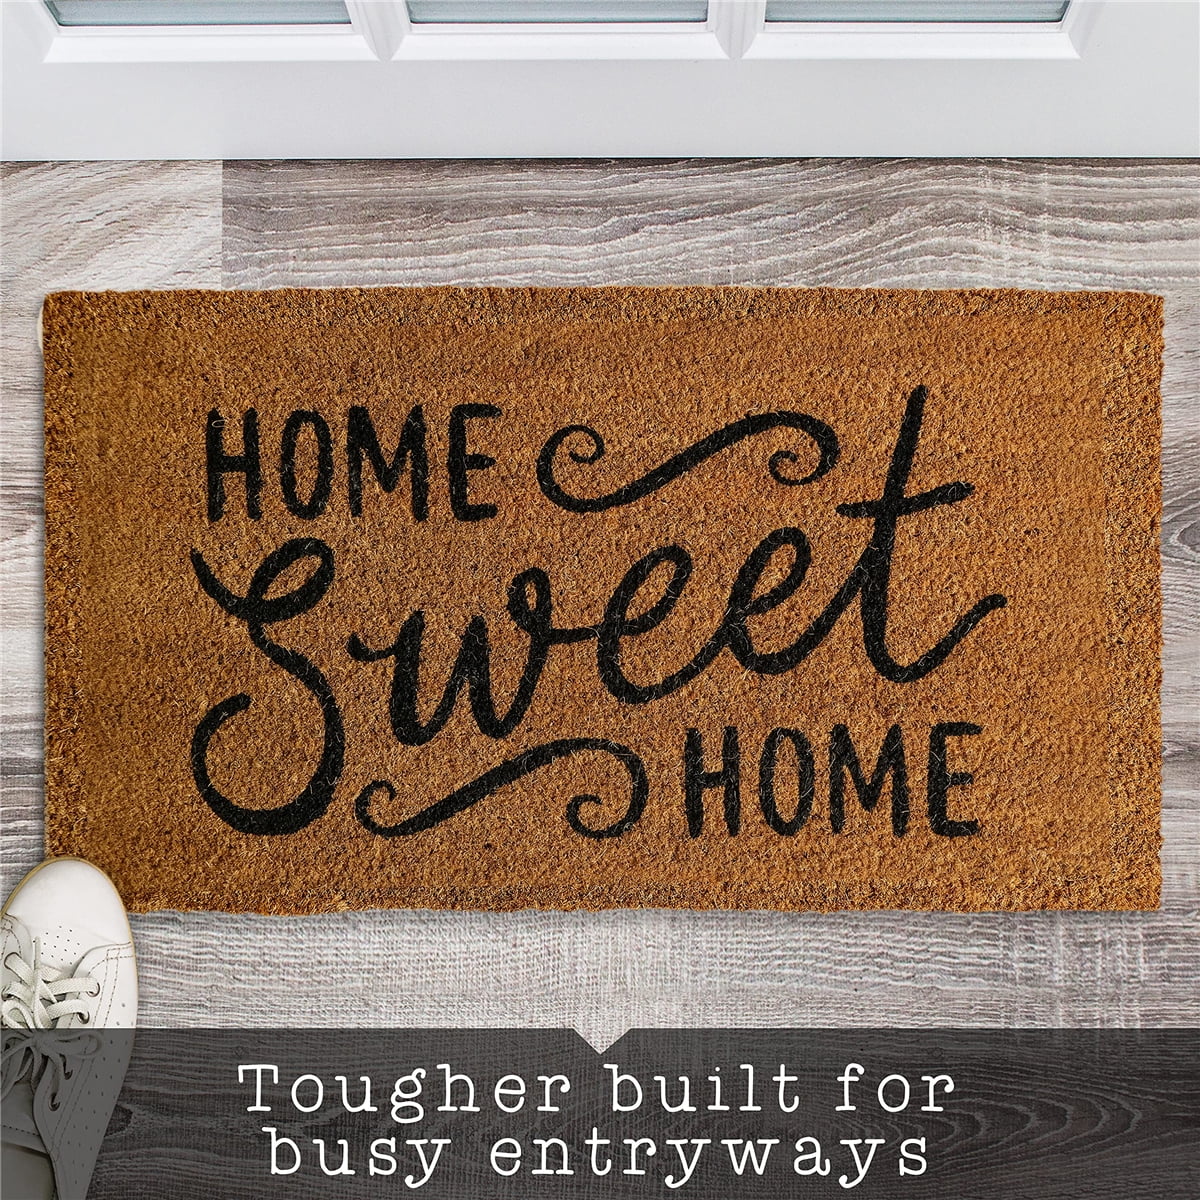 Home Sweet Home 21 Door Mat – Planks and Paint DIY Workshop & Boutique